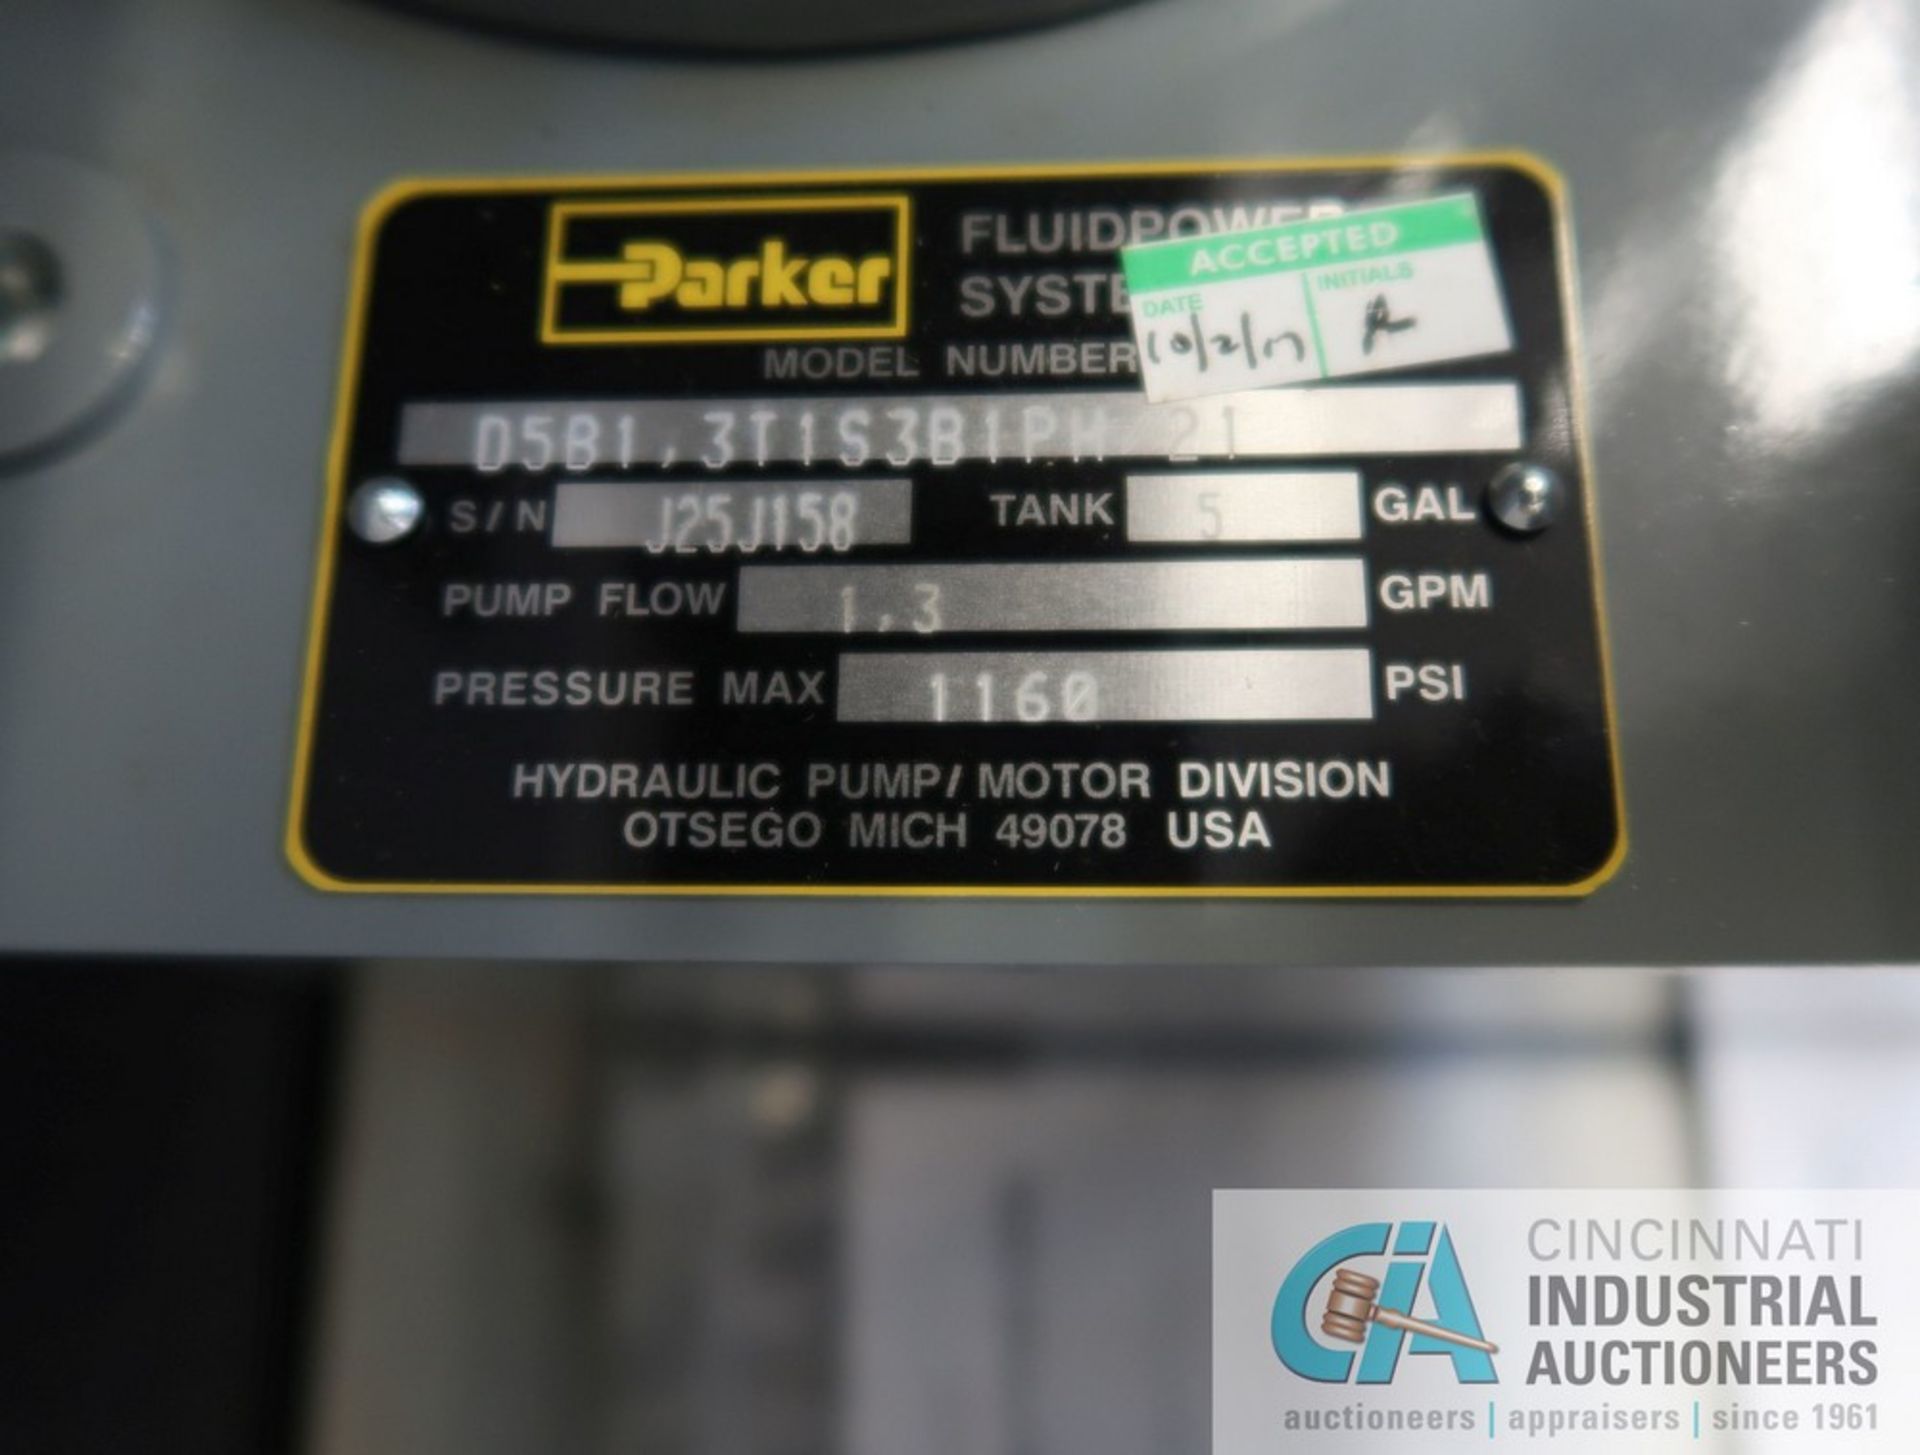 1 HP PARKE D-PAK BRAND NEW HYDRAULIC POWER UNIT; S/N J25J158, 5 GALLON TANK, SINGLE PHASE, 115 / 230 - Image 4 of 6